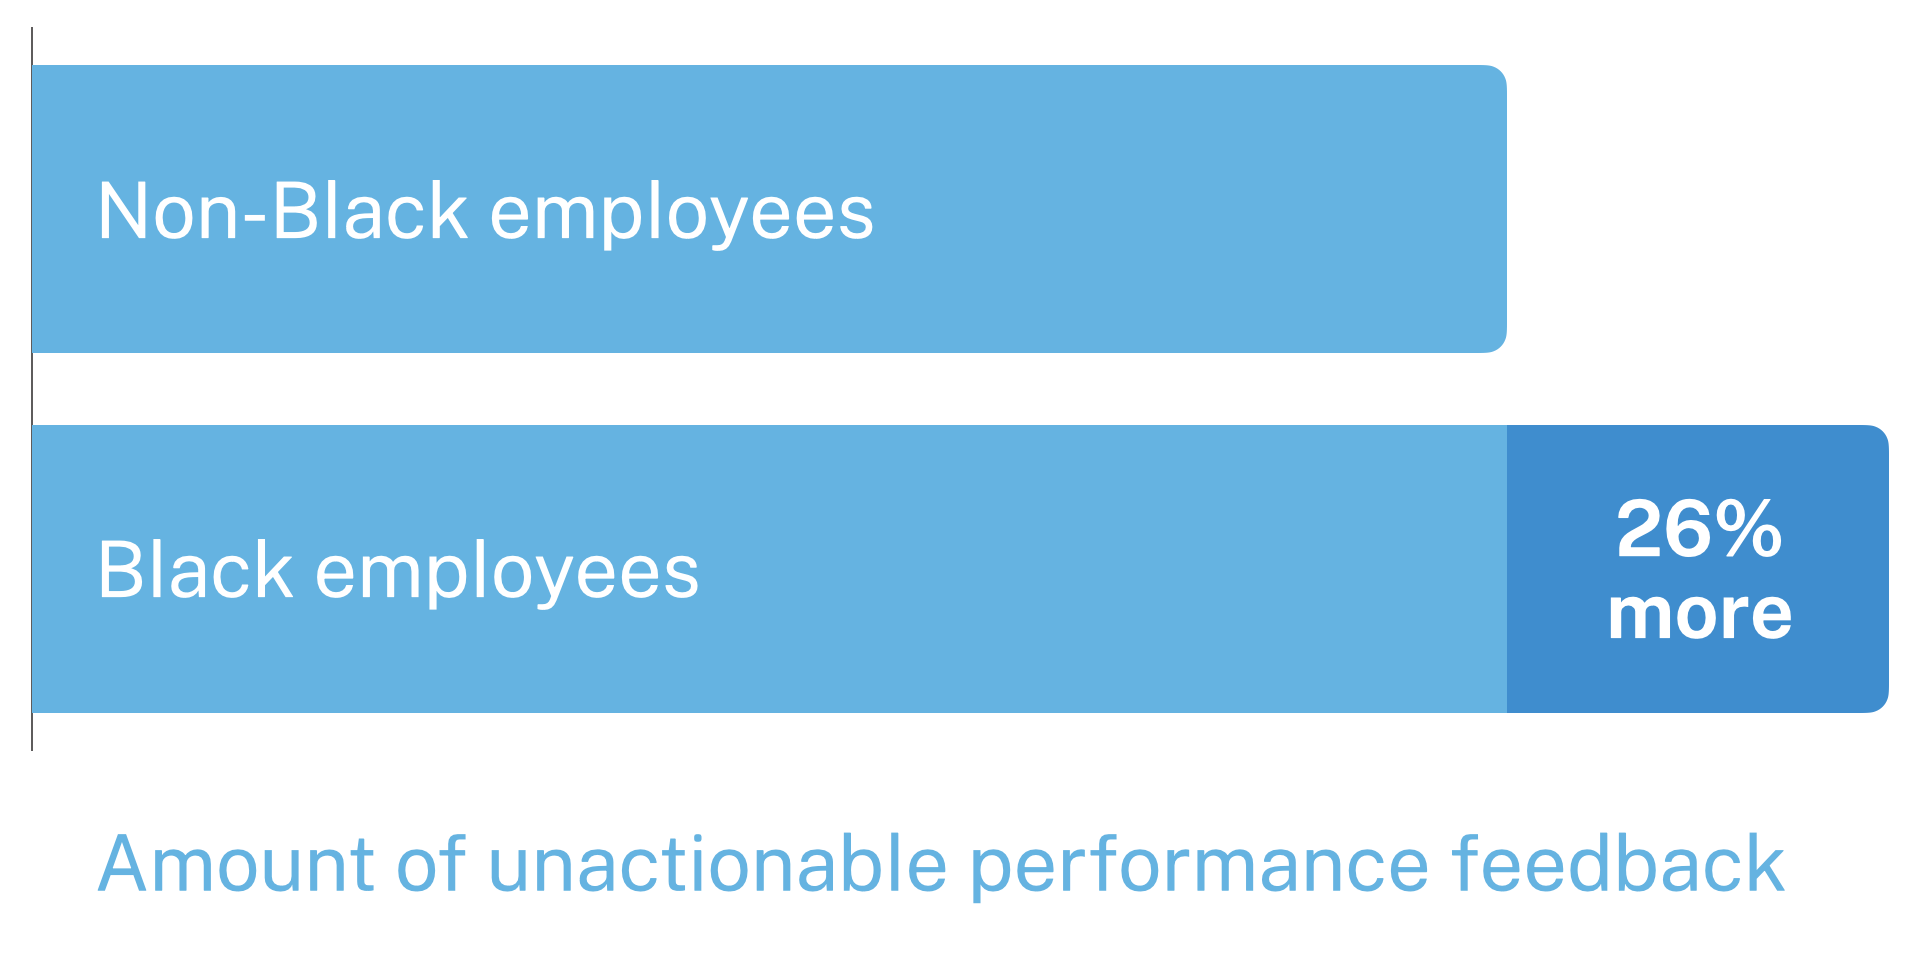 Black employees receive 26% more unactionable performance feedback